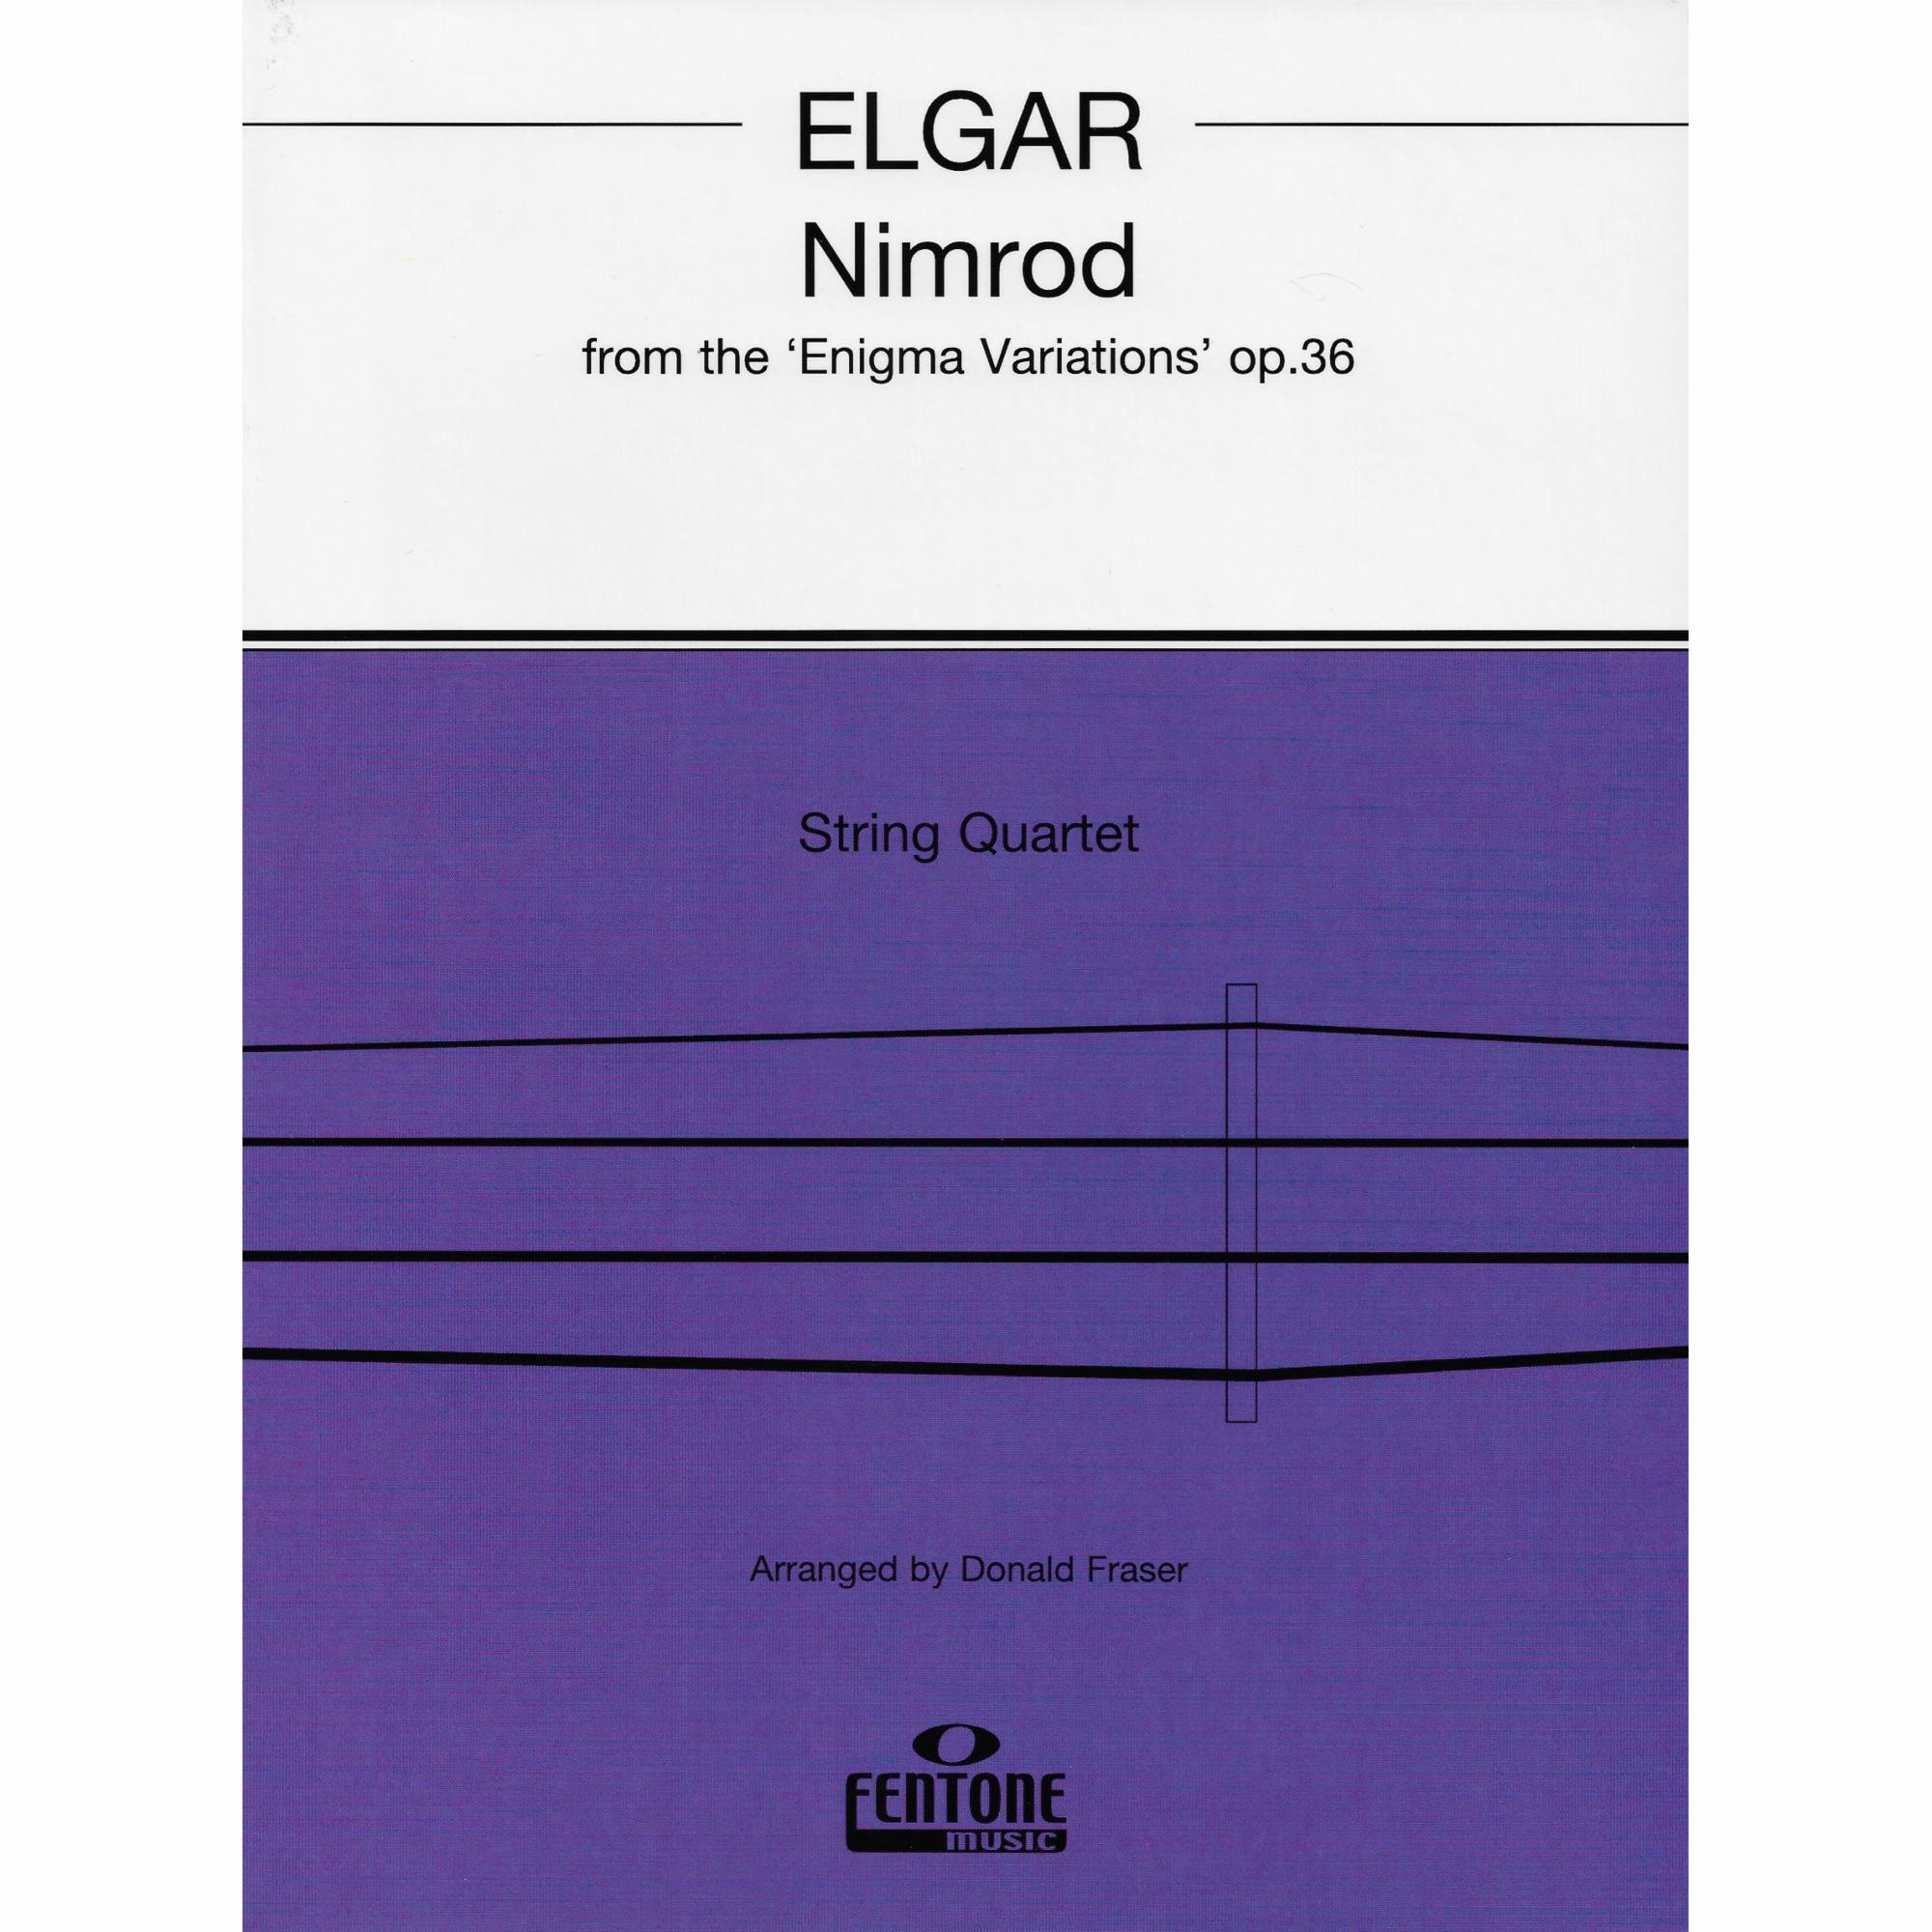 Elgar -- Nimrod, from Enigma Variations, Op. 36 for String Quartet